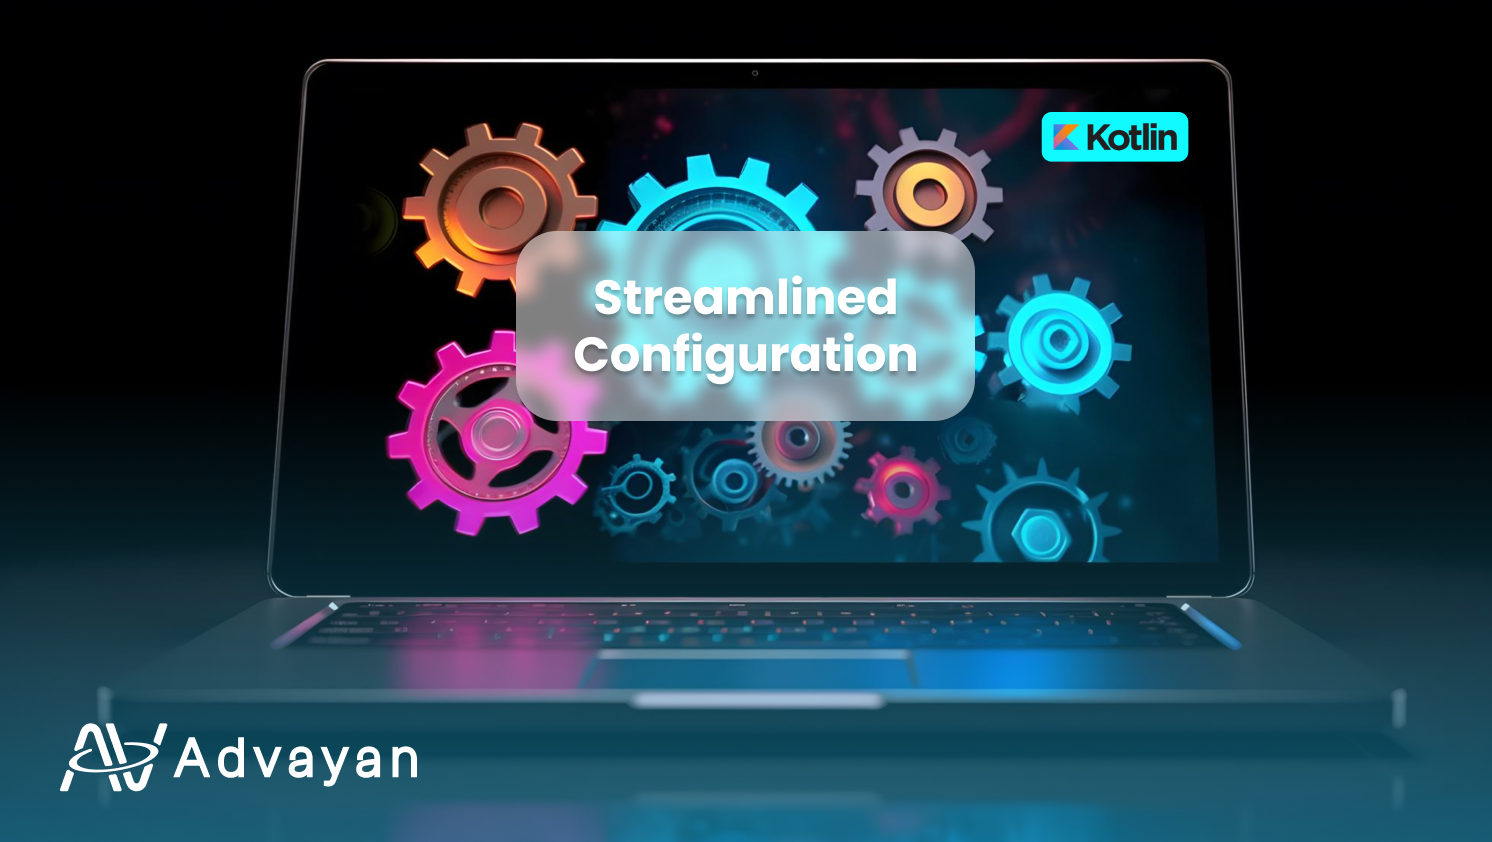 Easy to Setup: Kotlin's Streamlined Configuration 